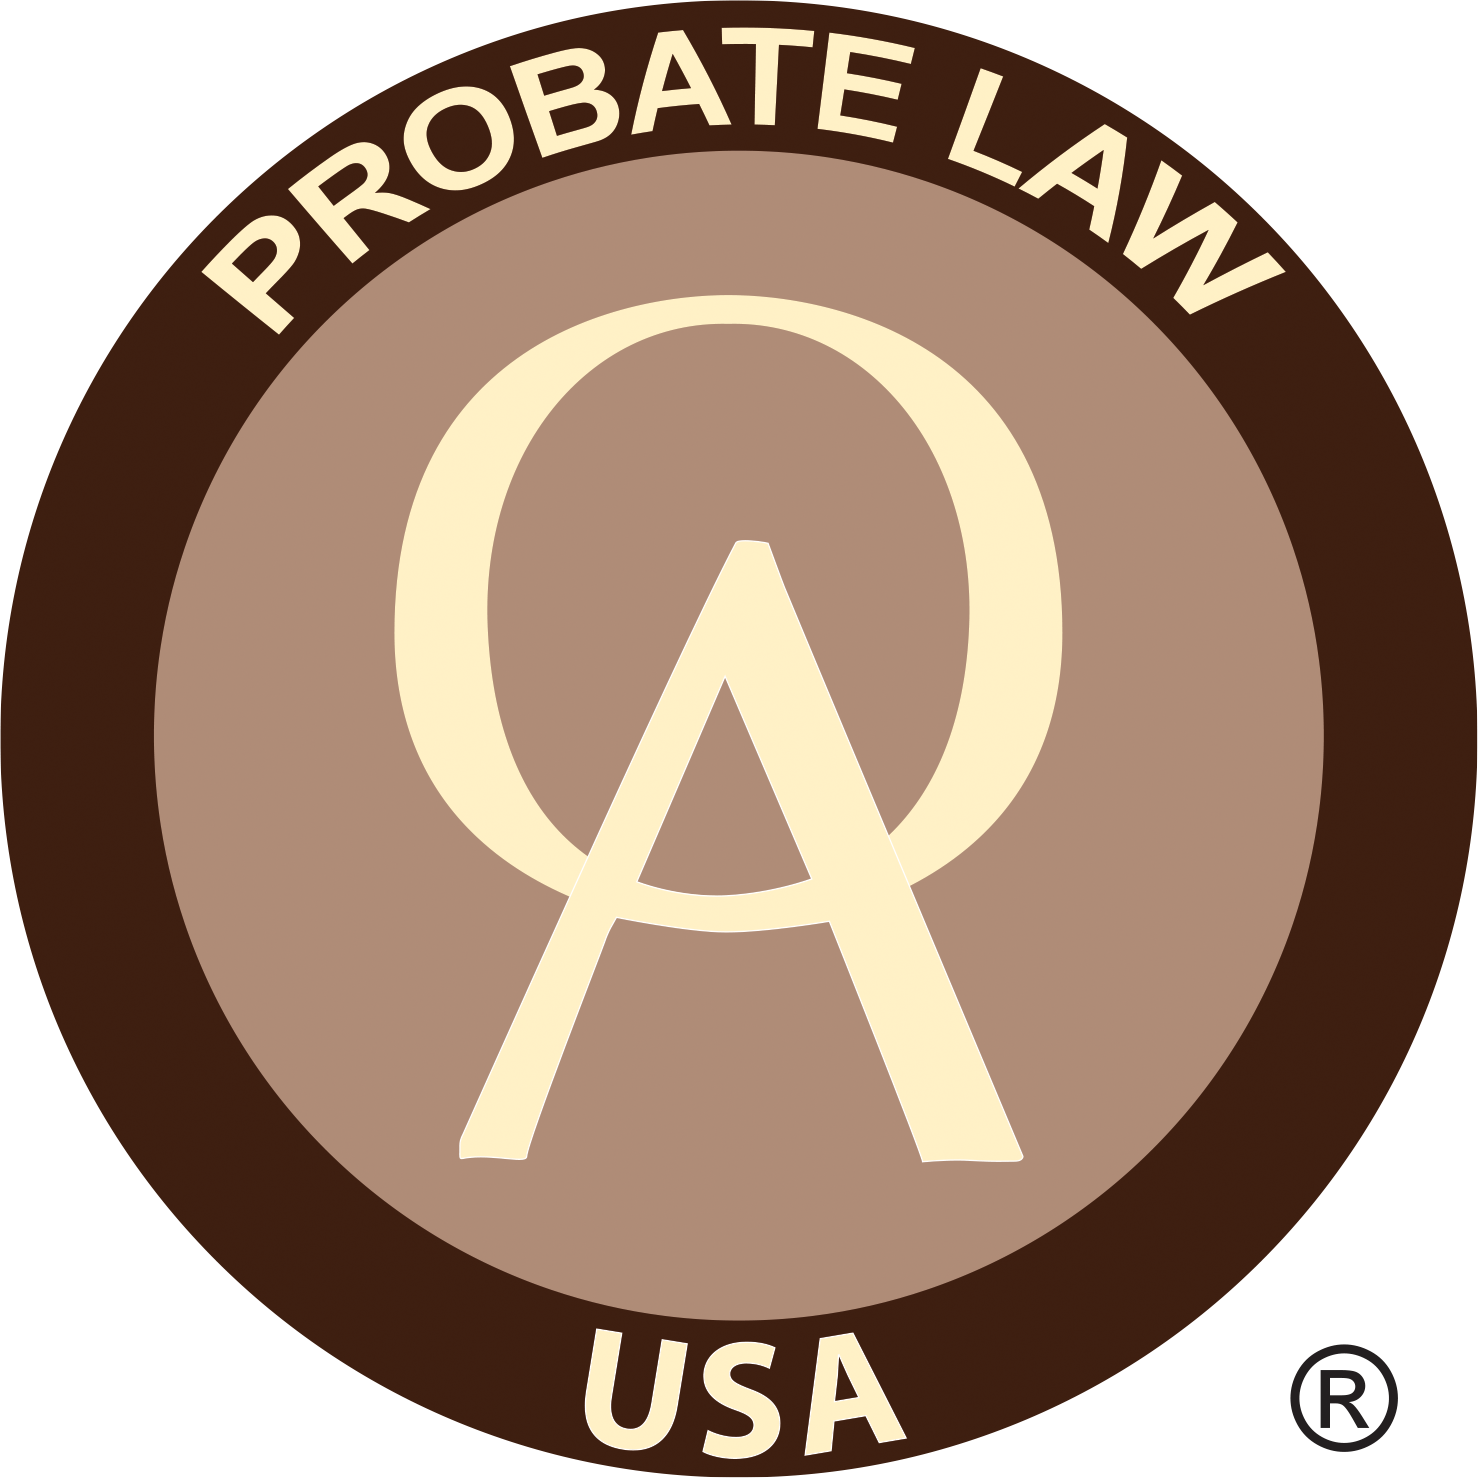 Probate Law USA